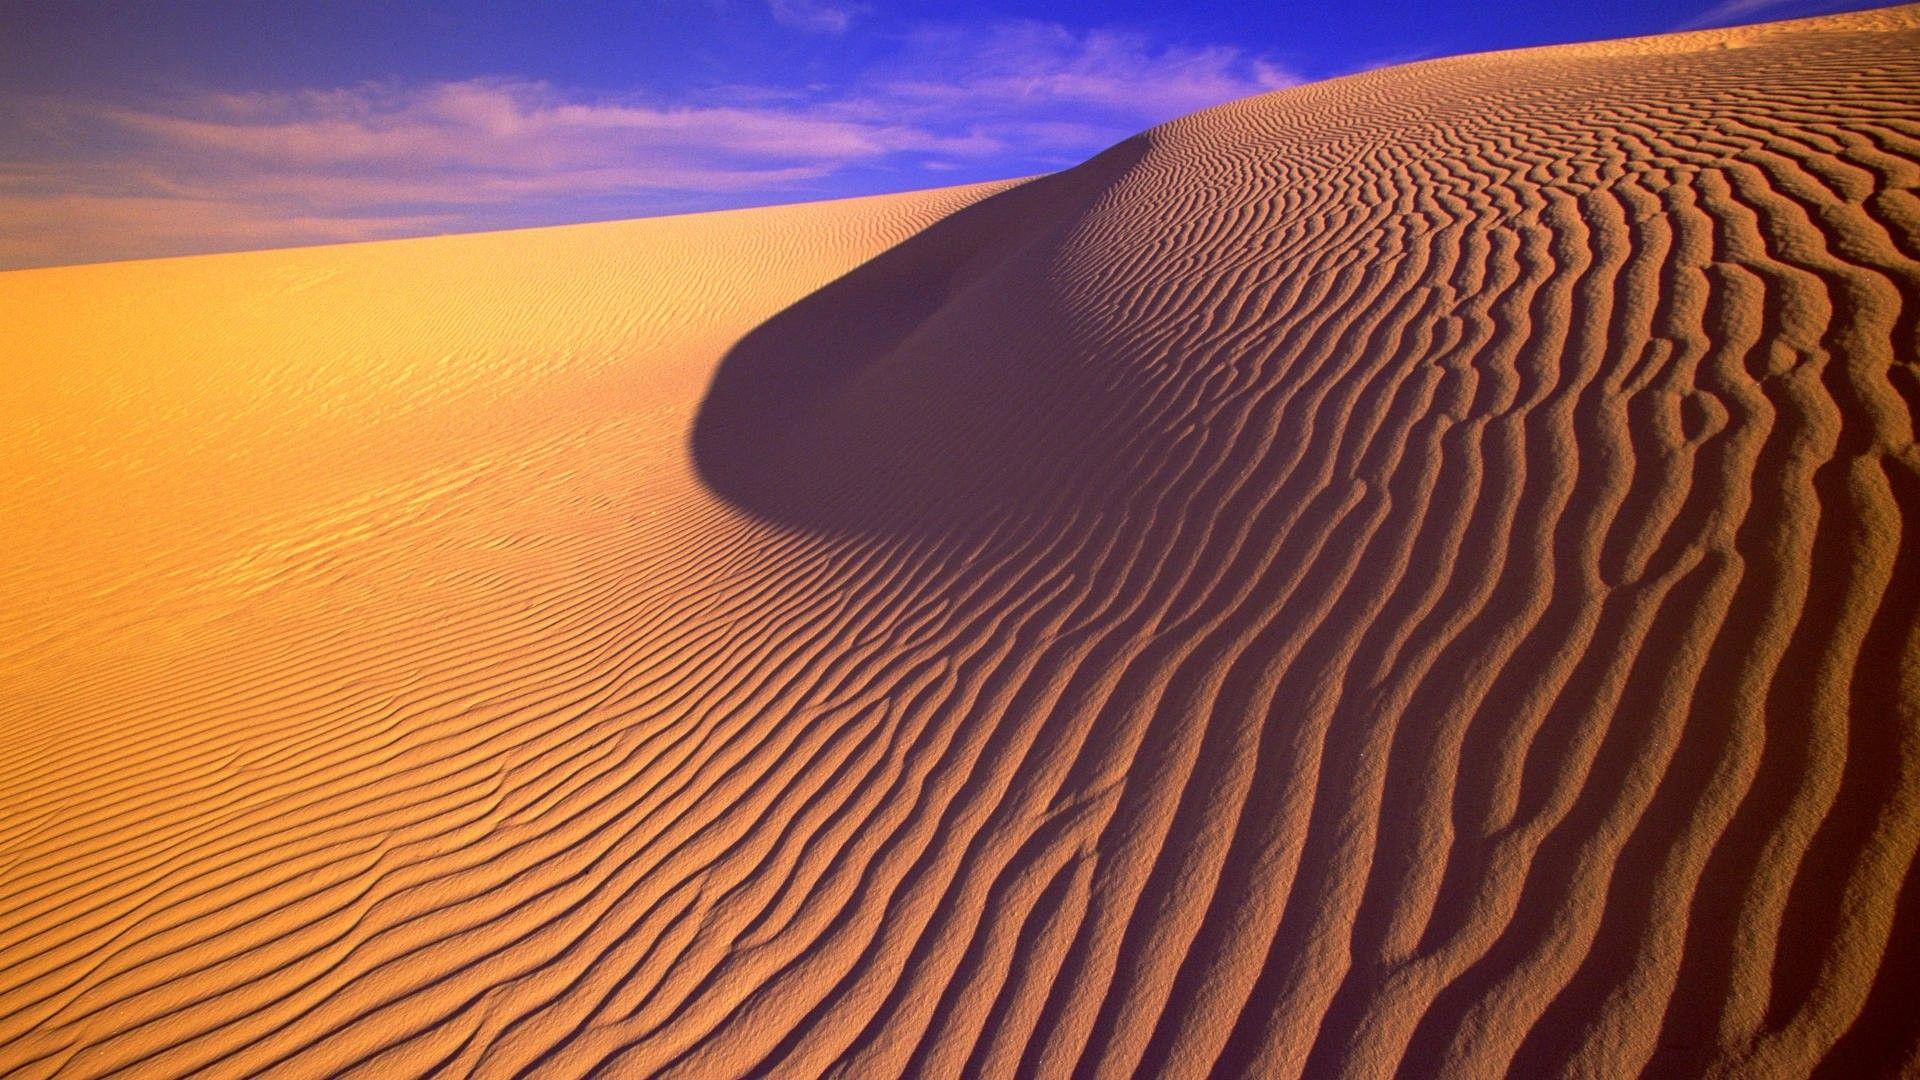 Sand Dunes Wallpaper Images  Free Download on Freepik